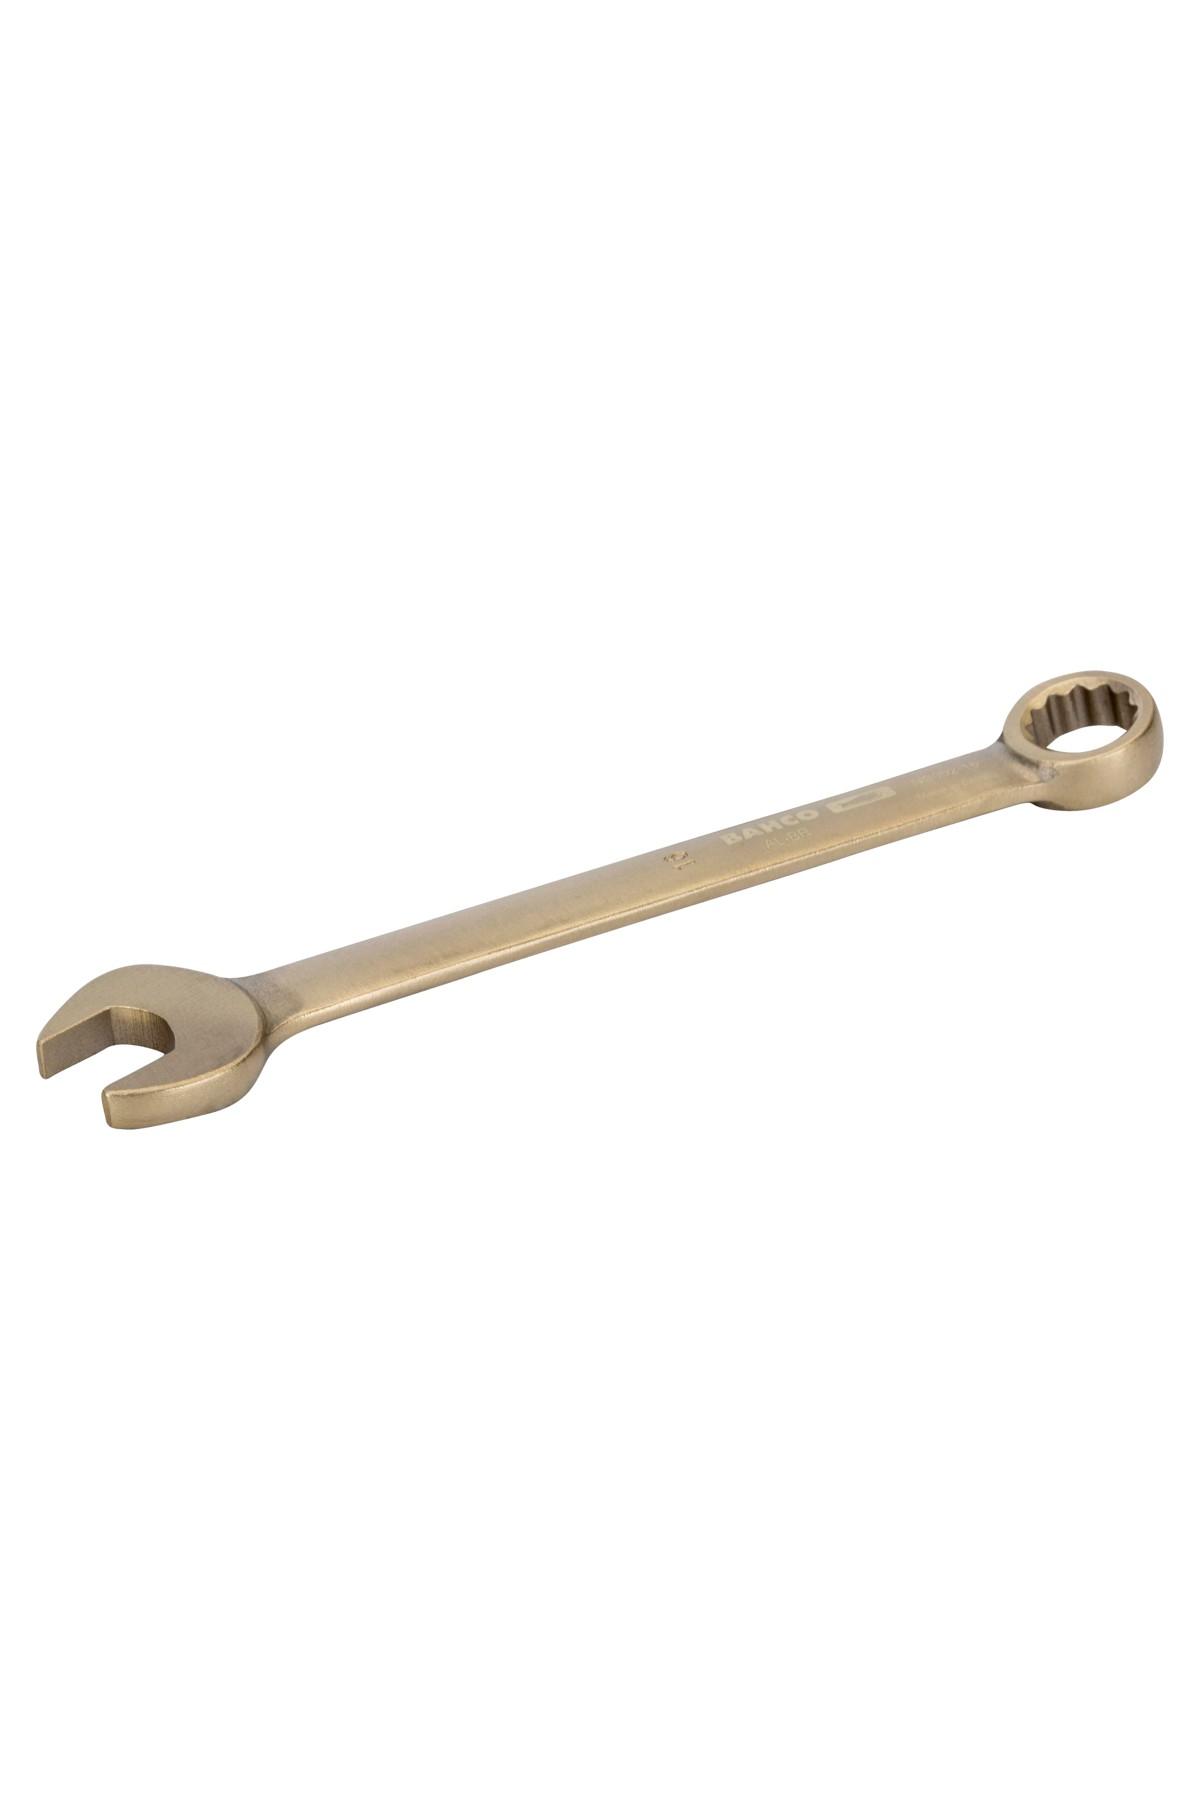 Gnistfri aluminium-bronze ringnøgle 6 mm